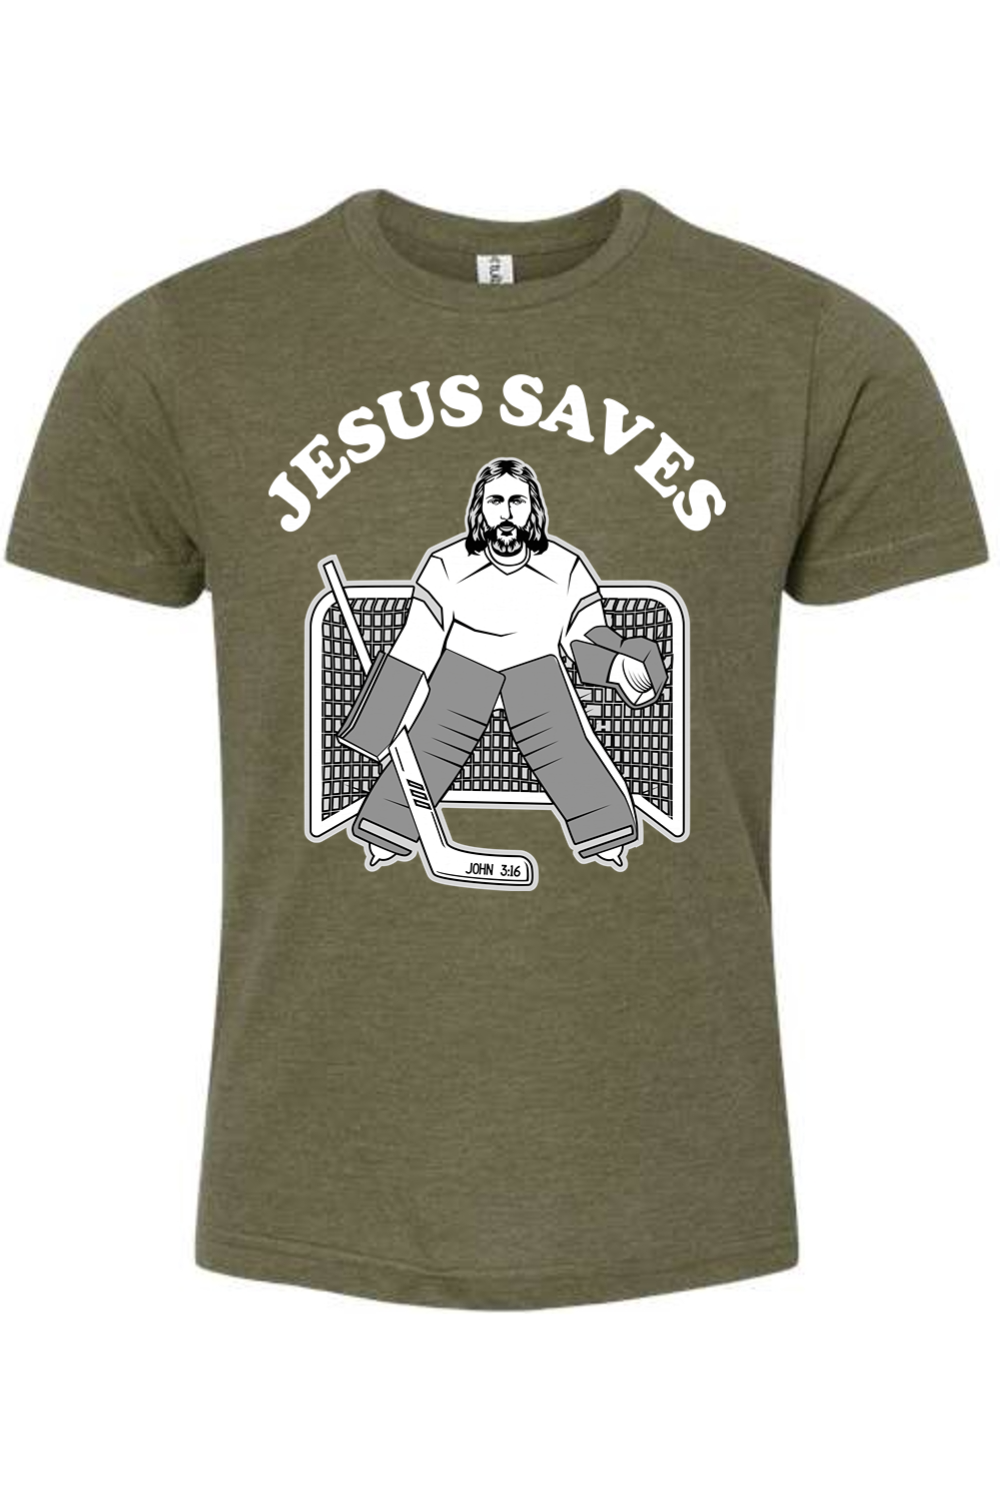 Jesus Saves - Hockey - Kids T-Shirt